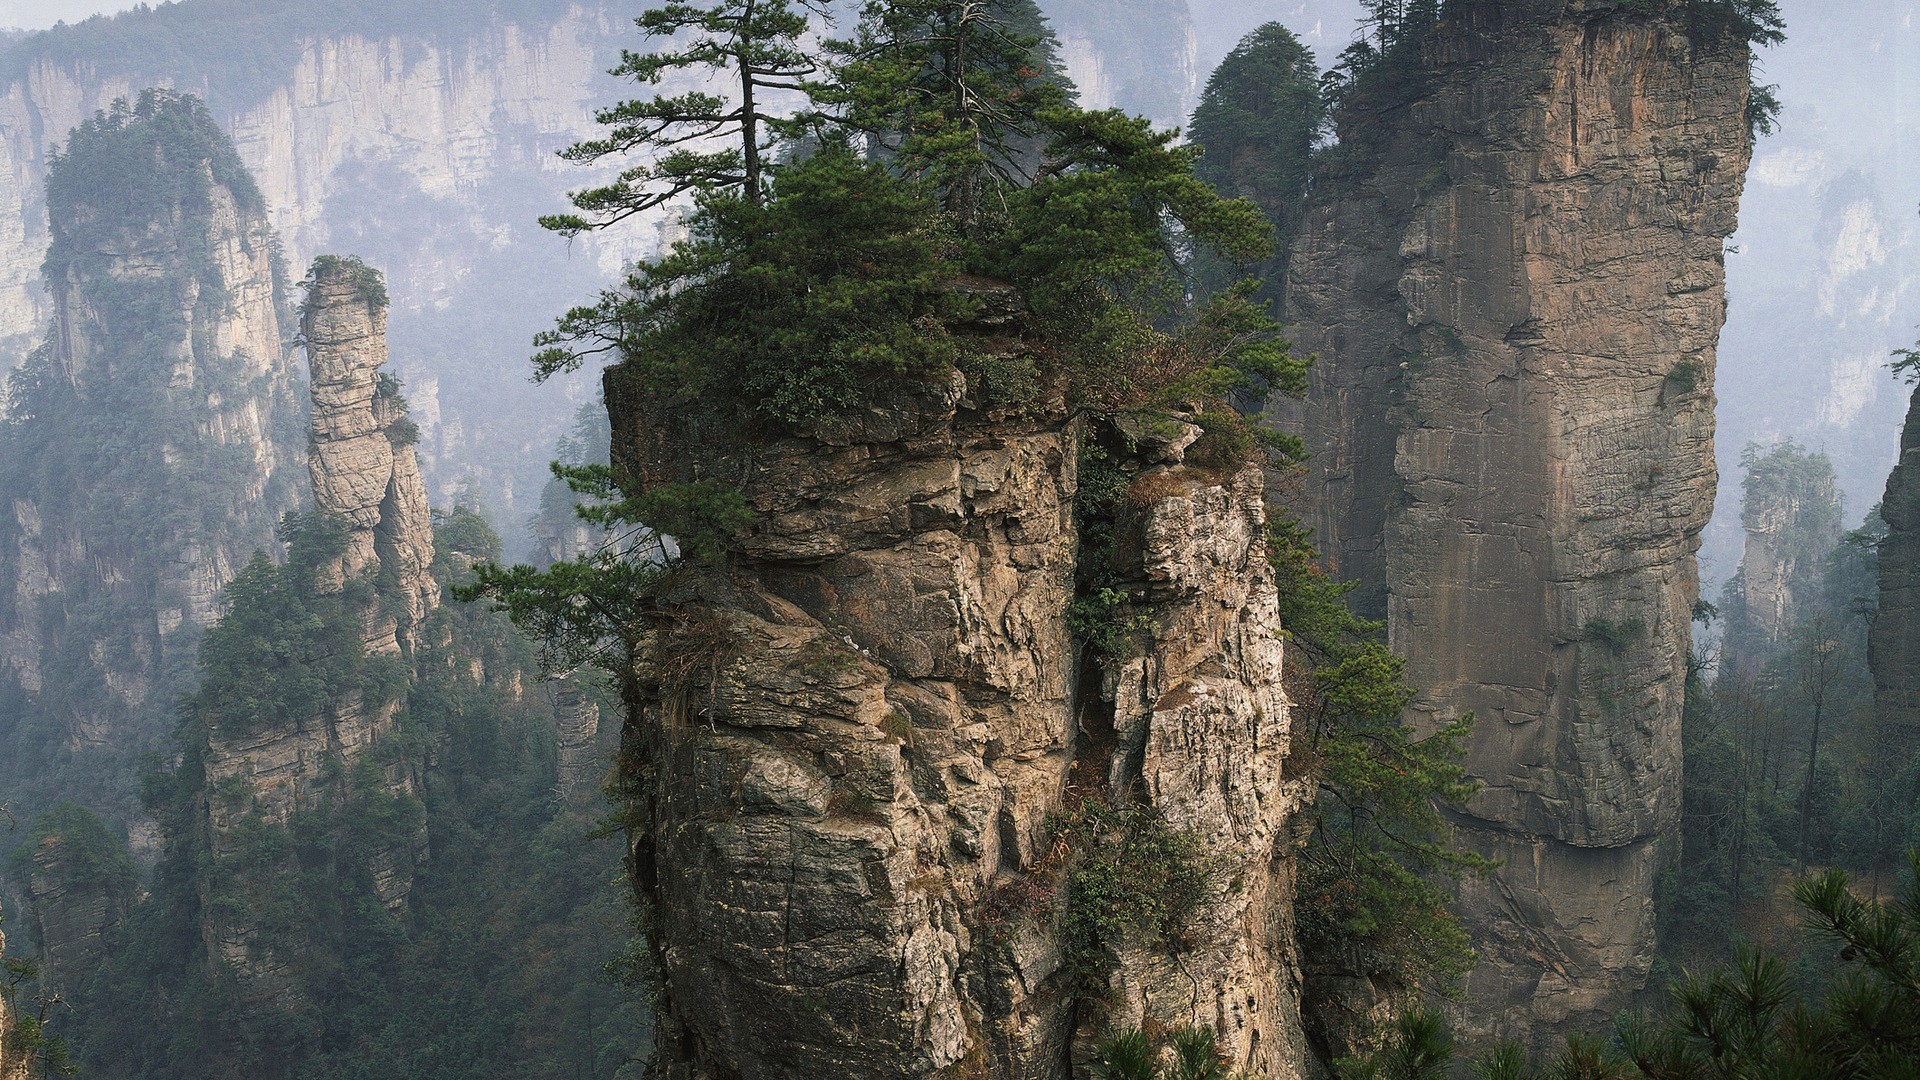 General 1920x1080 landscape nature rocks trees China Huanglong National Park rock formation plants